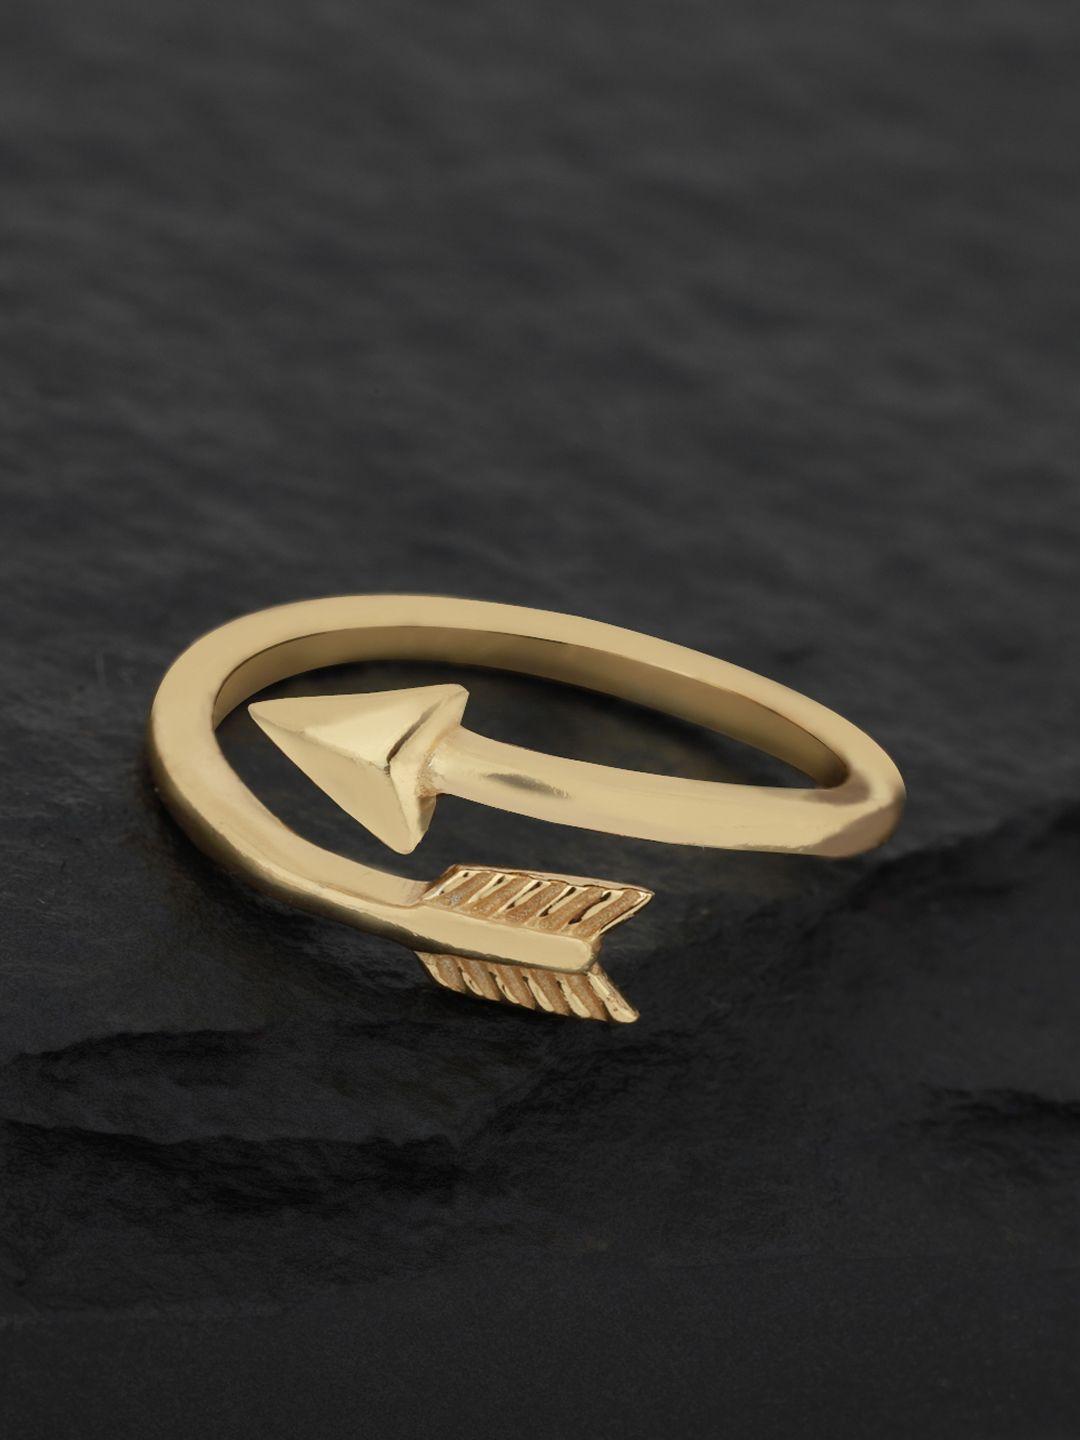 carlton london women gold-plated textured adjustable finger ring